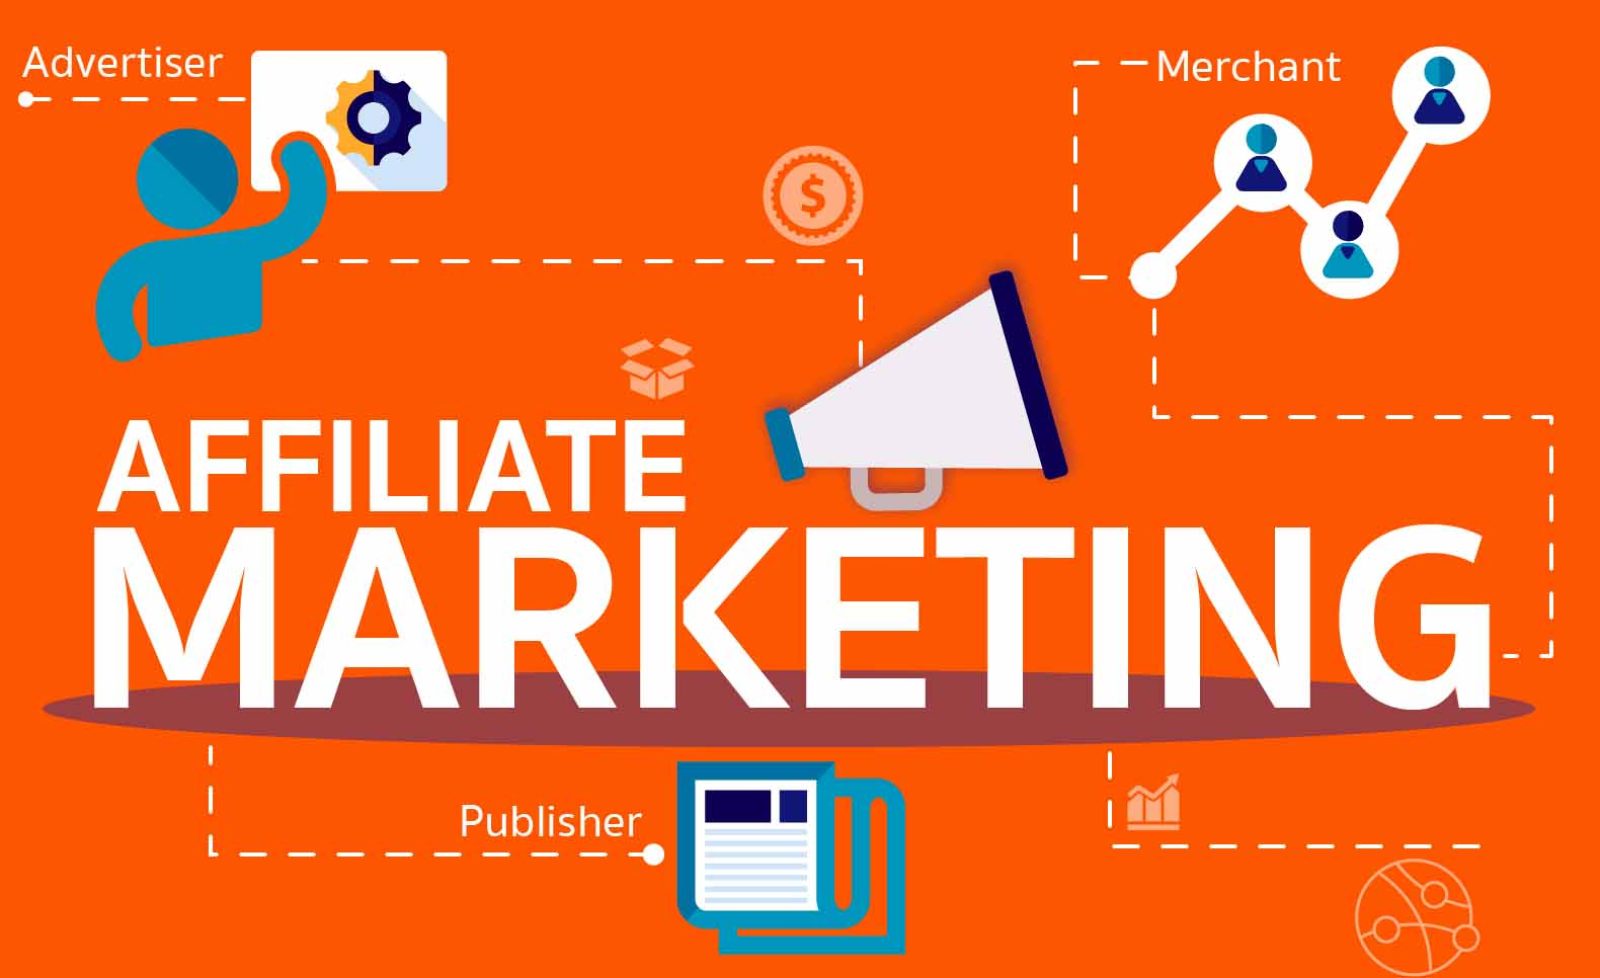 understanding-affiliate-marketing-14-secrets-to-passive-income